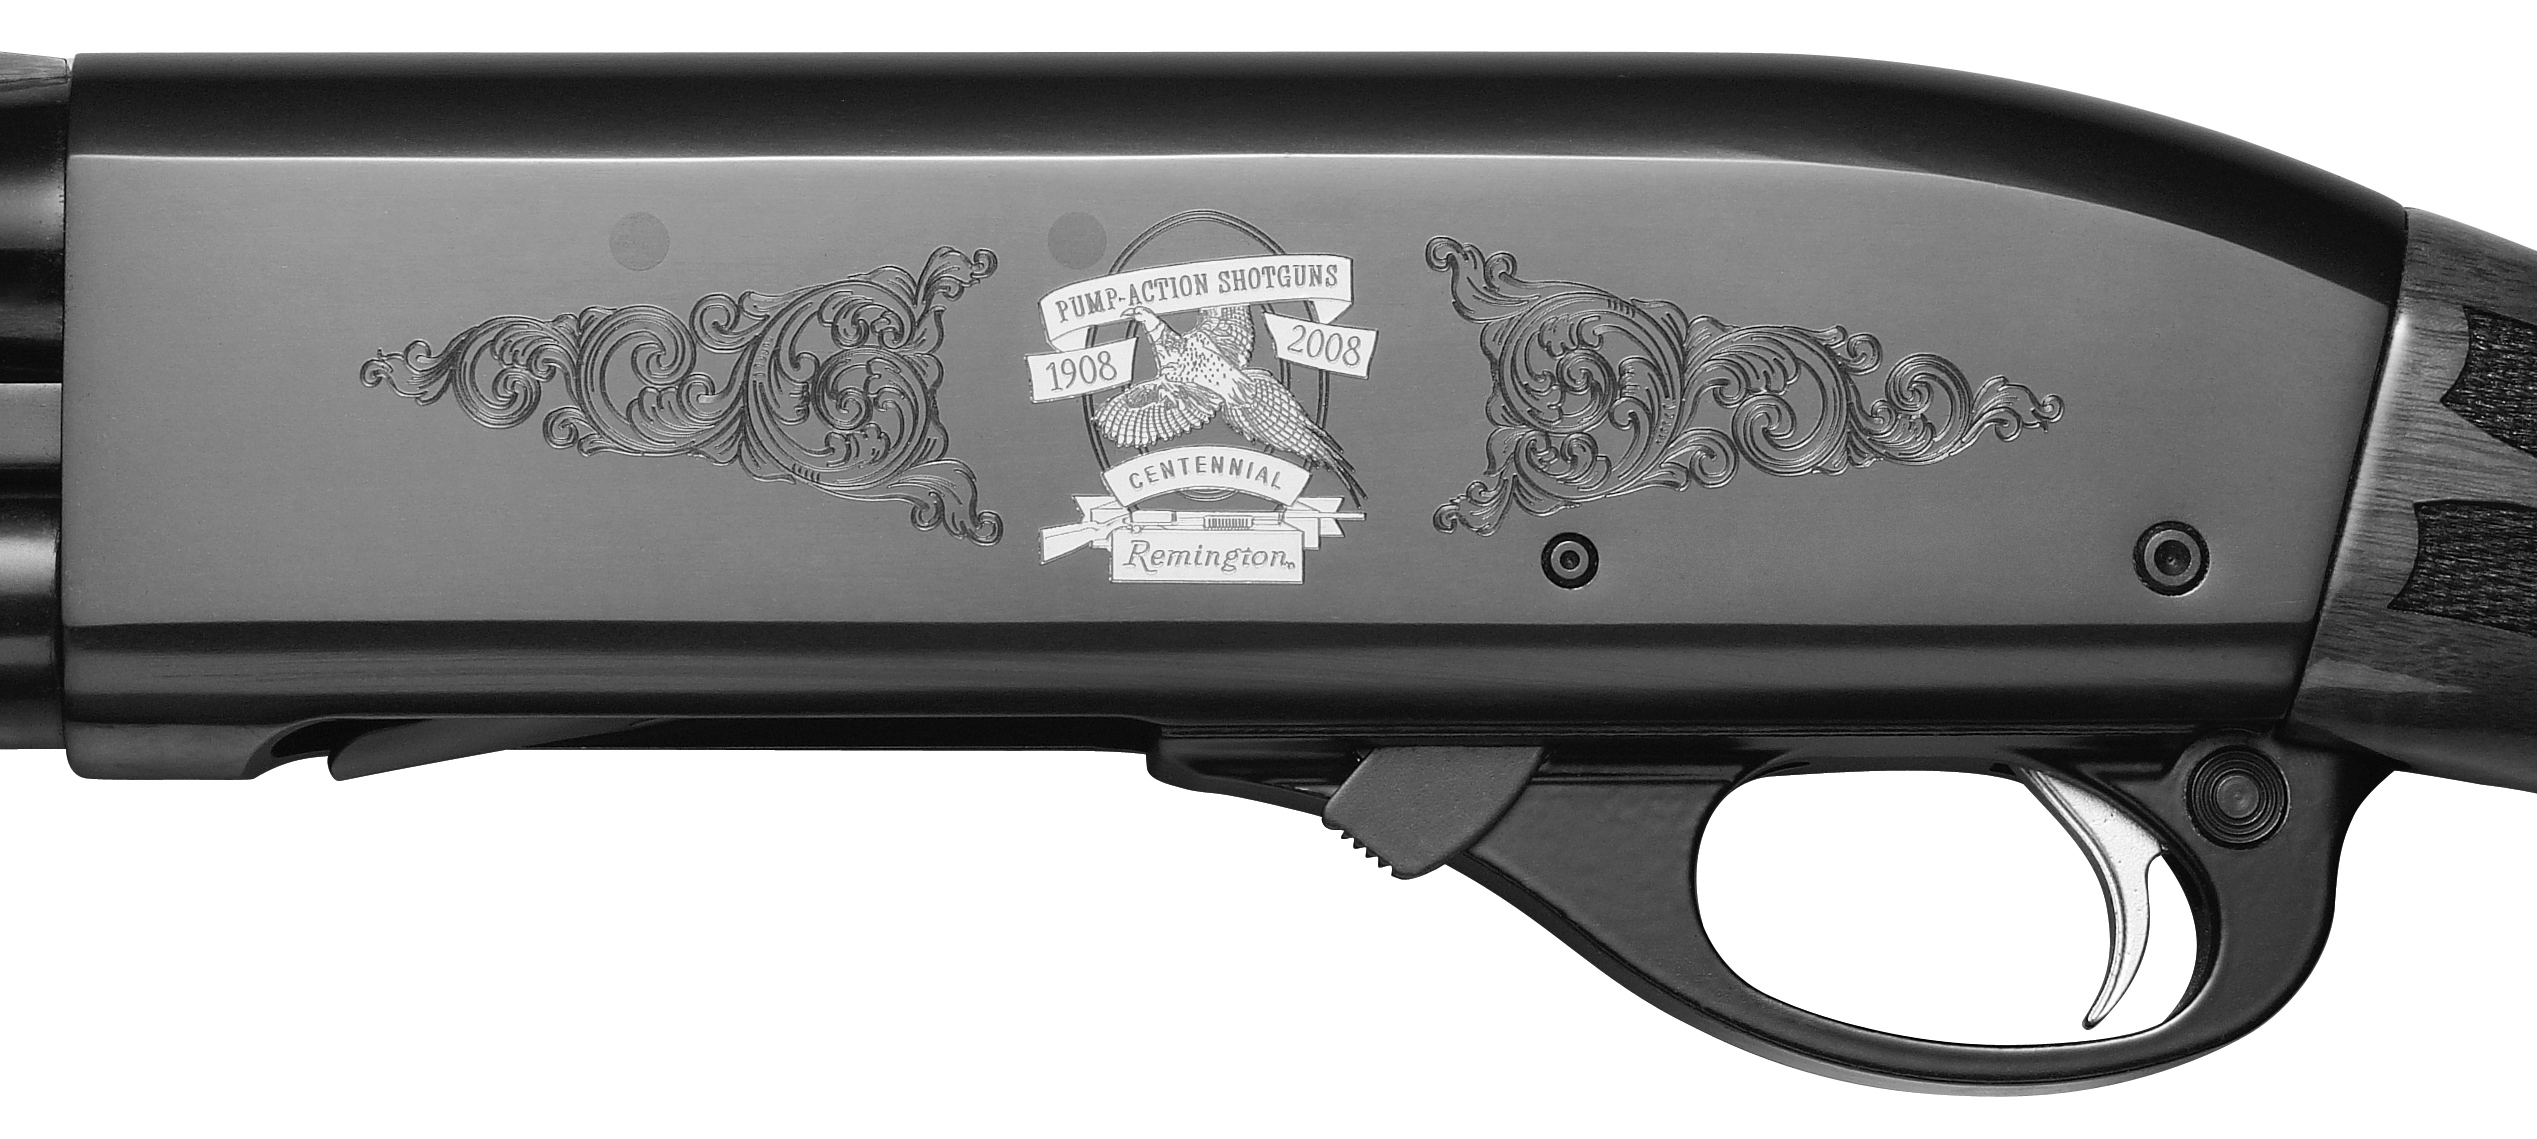 Commemorative Edition 12-gauge celebrating 100 years of Remington pump shot...